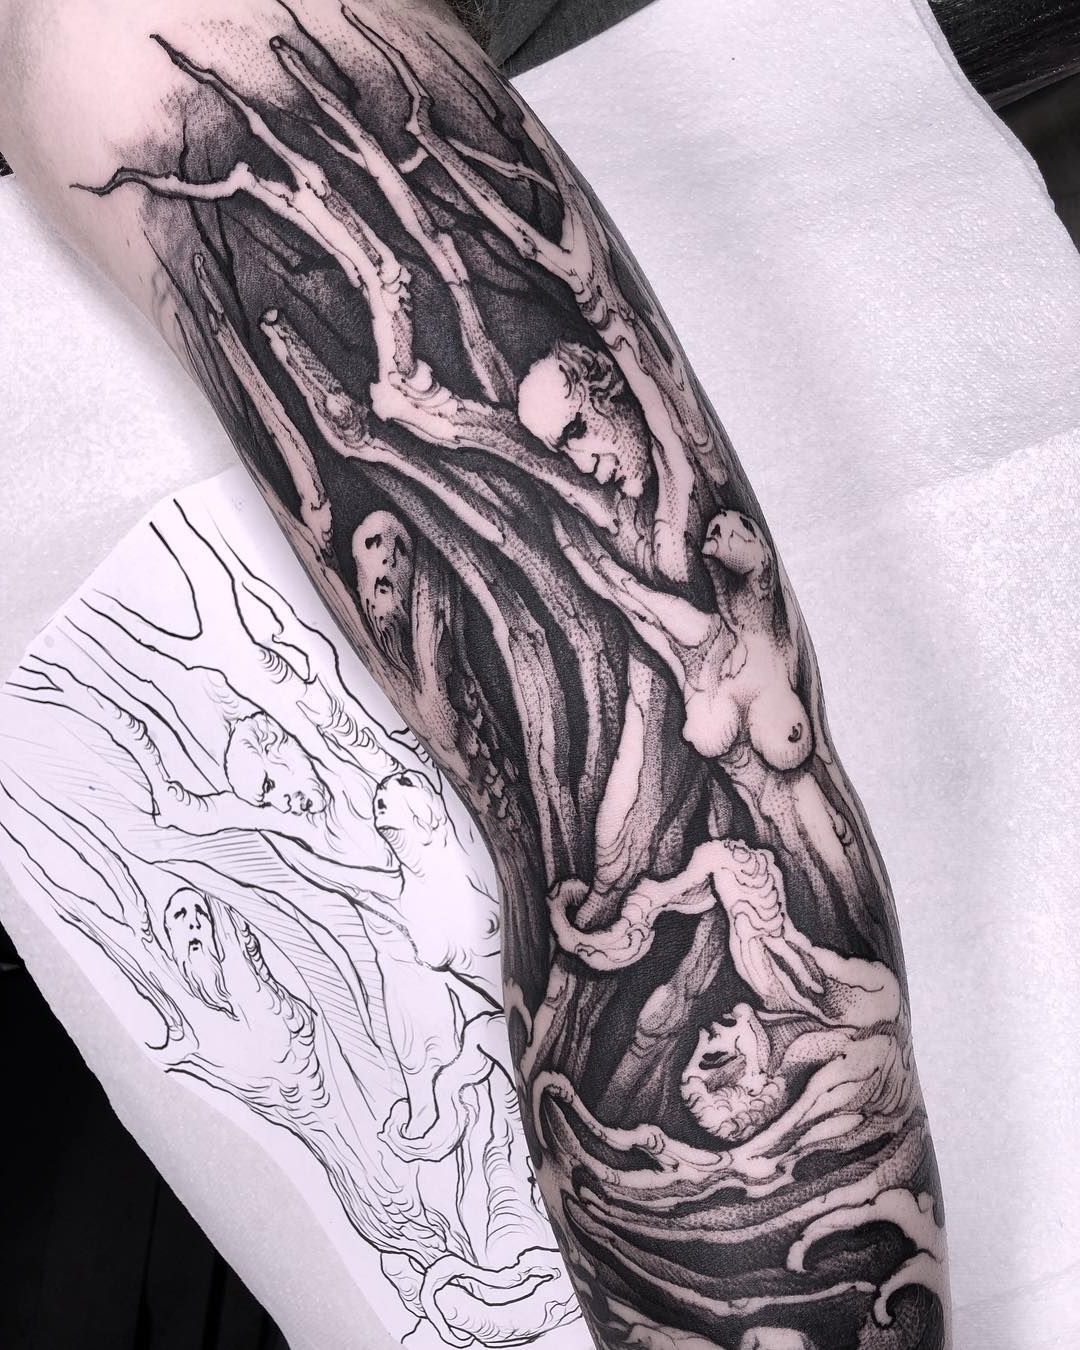 Idée de tatouage arbre mort.